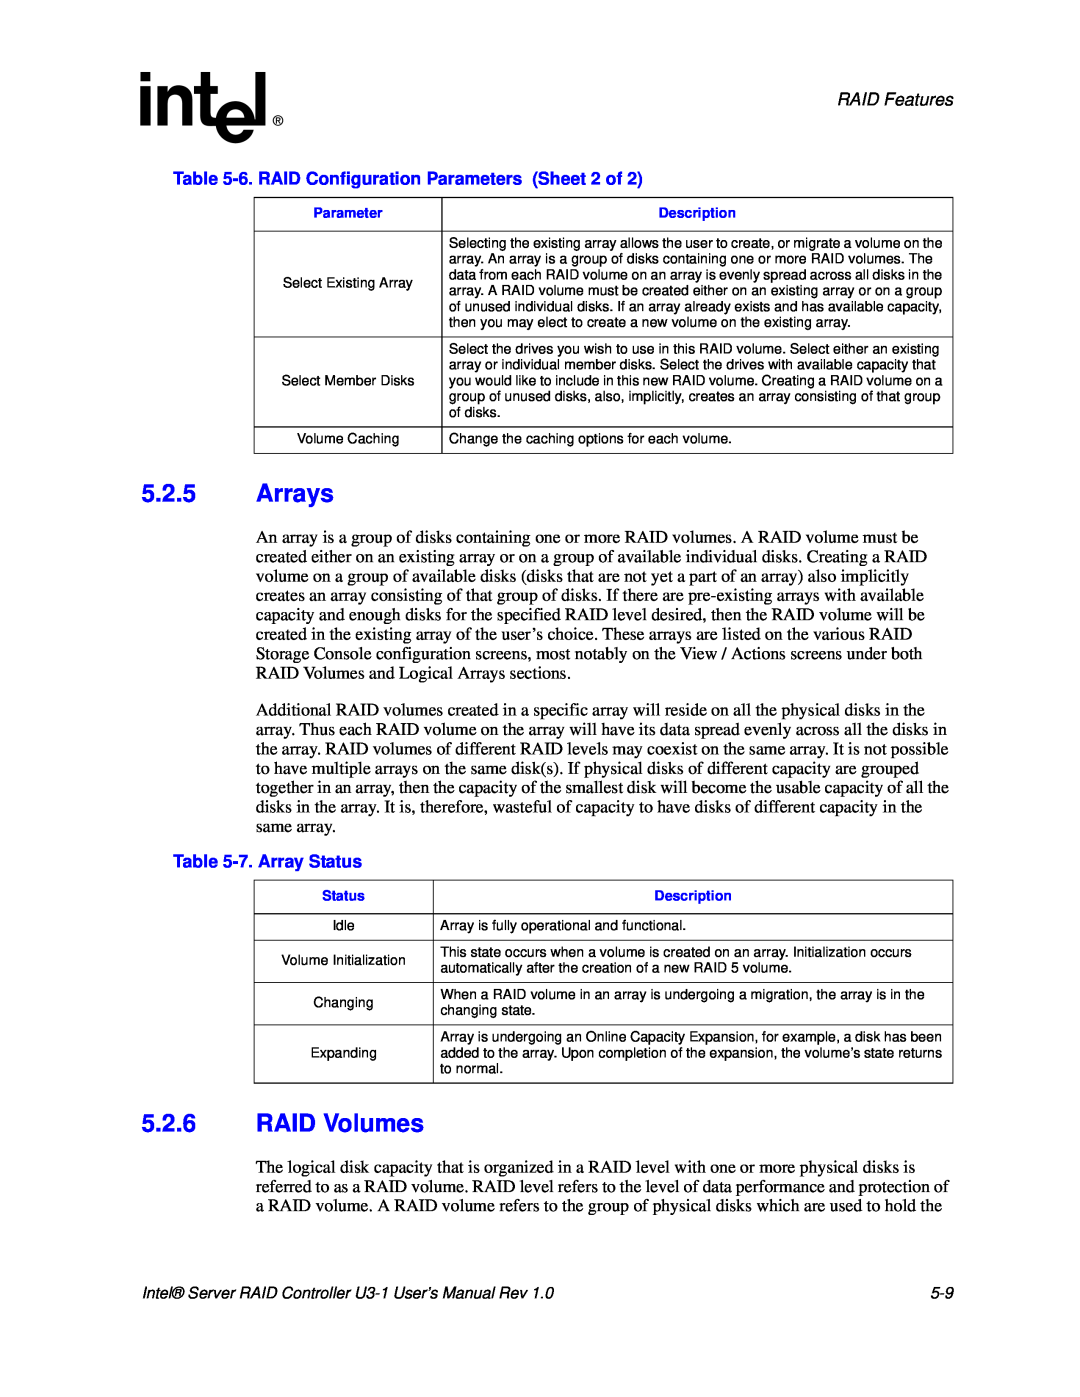 Intel SRCU31 user manual 5.2.5Arrays, 5.2.6RAID Volumes, RAID Features, 7.Array Status 